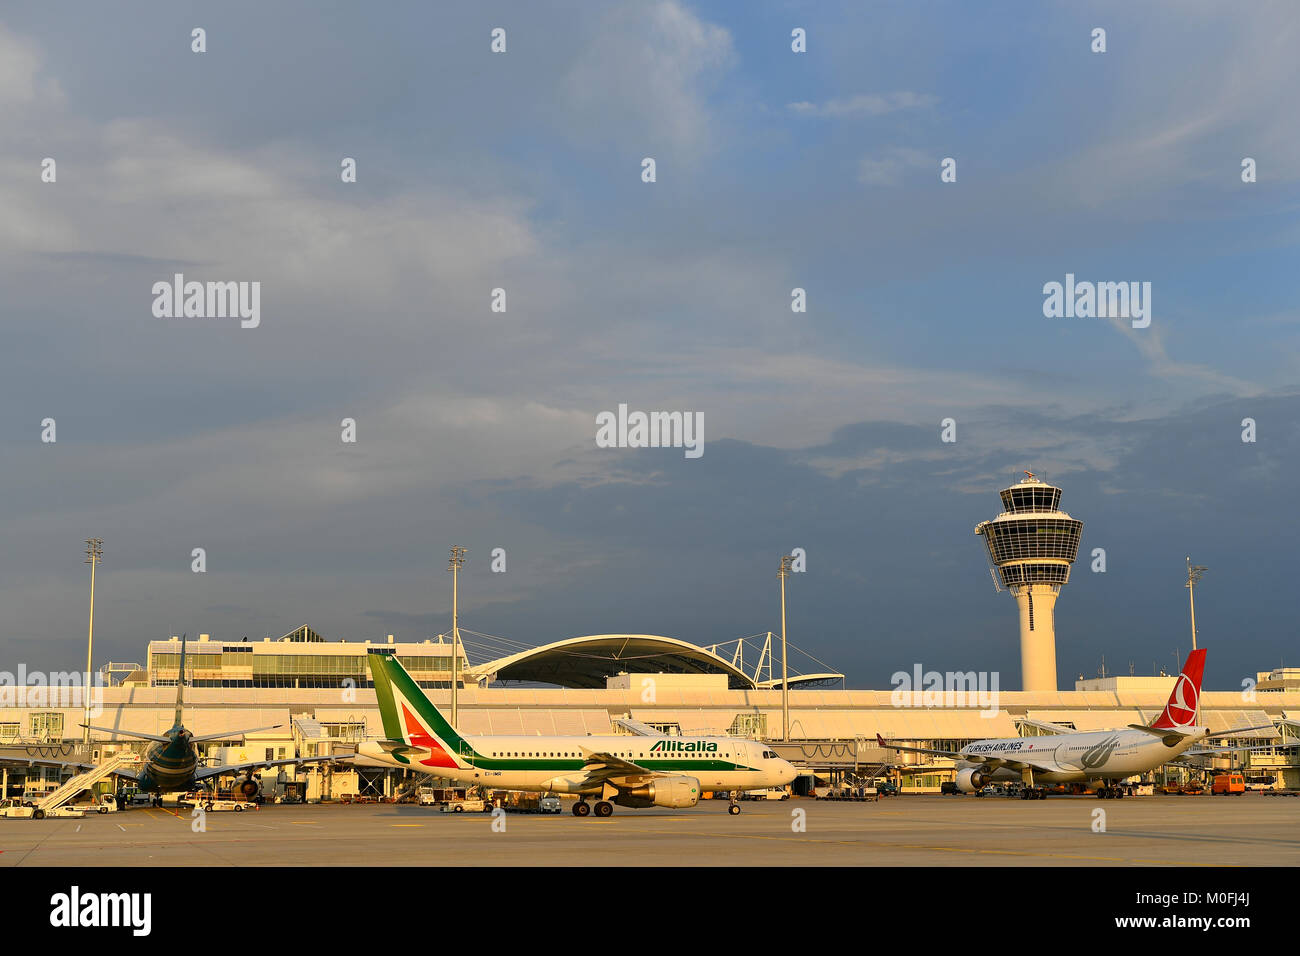 Alitalia, Airbus, A319, sun, Aircraft, Airplane, Plane, Terminal 1, Tower, MAC, Munich Airport, Center,  Sunset, pool, position, ramp, cloud, sky, Stock Photo